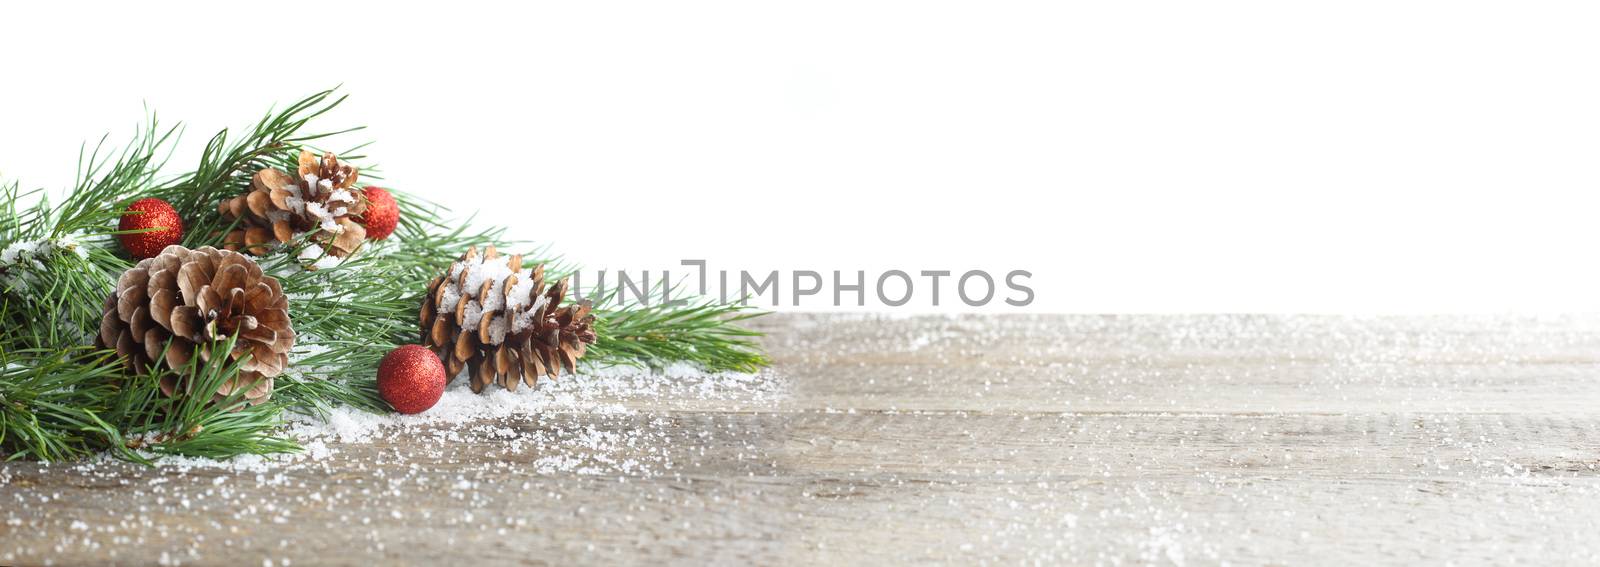 Pine cone and branch by destillat